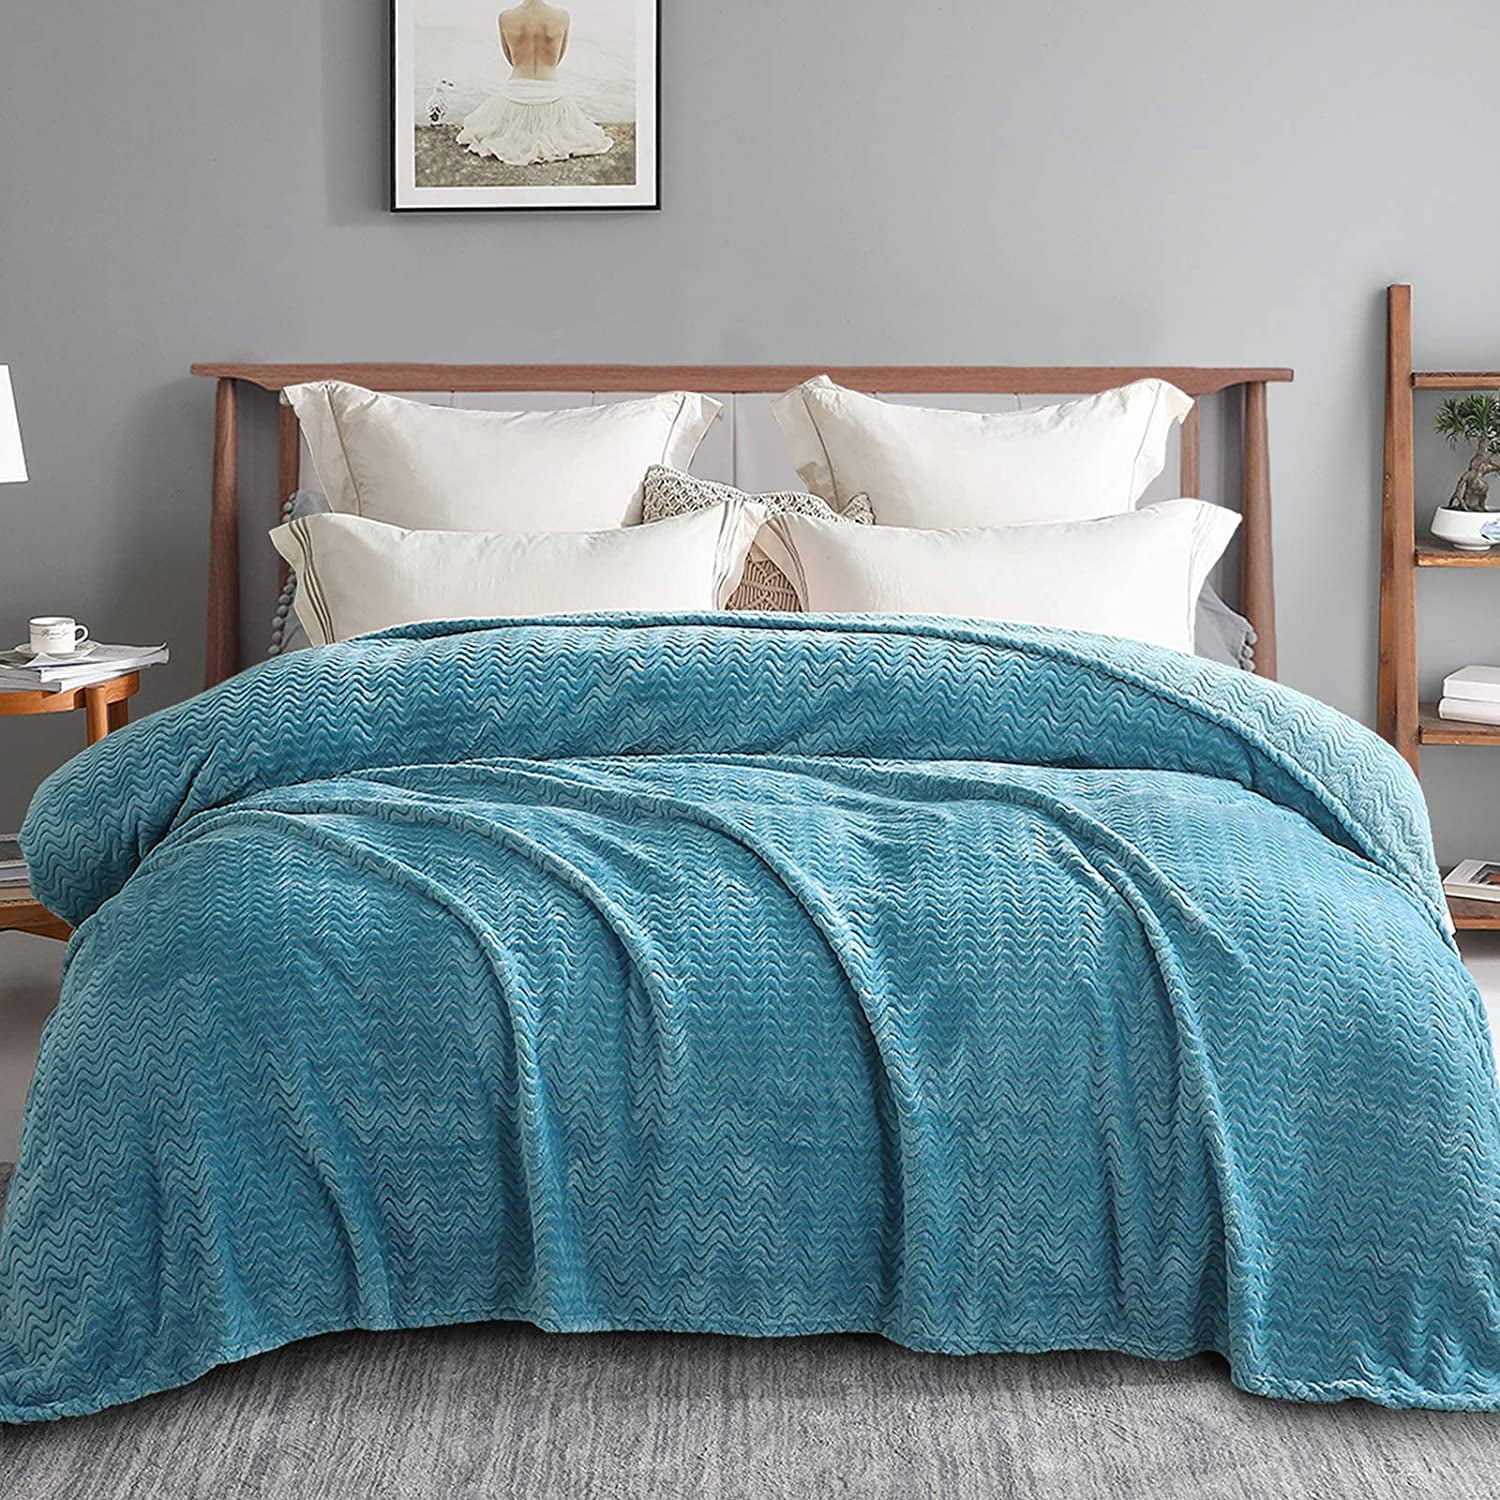 Exclusivo Mezcla Waffle Textured Soft Fleece Blanket,Twin Size Bed Blanket Navy Blue,90x66 inch -Cozy,Warm and Lightweight 